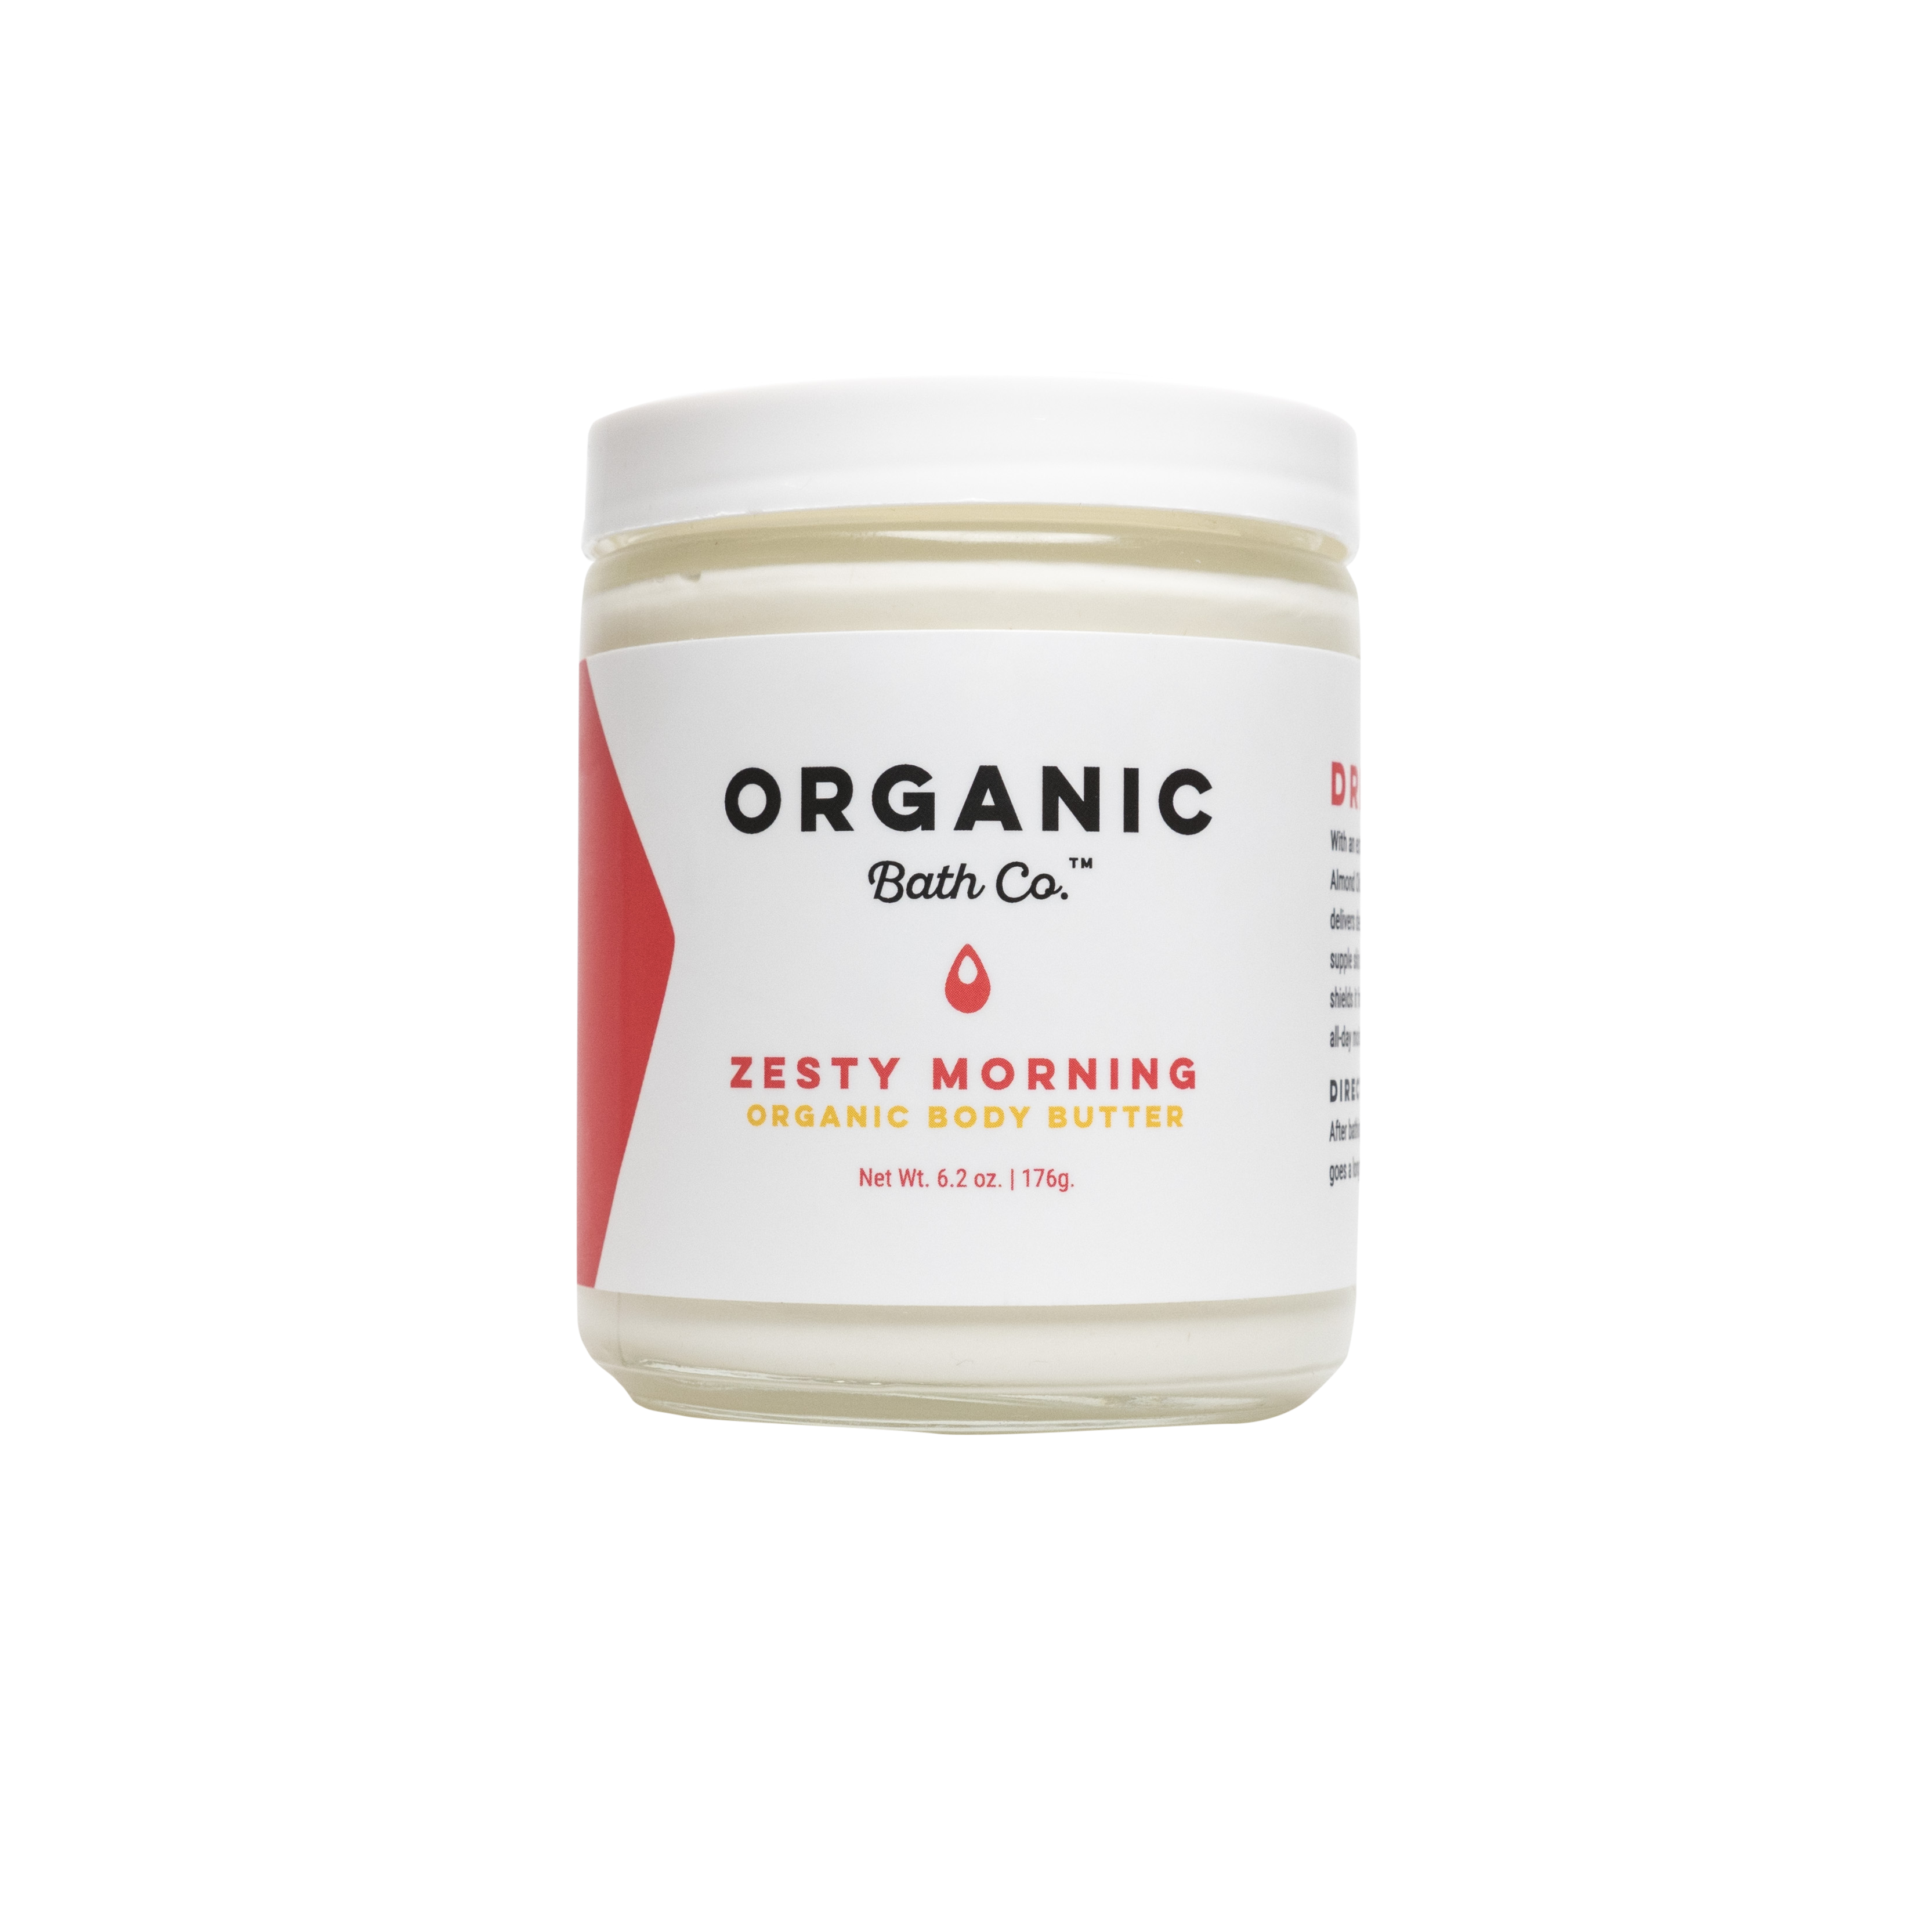 Organic Bath Co Zesty Morning Organic Body Butter - NEW PACKAGING - AILLEA